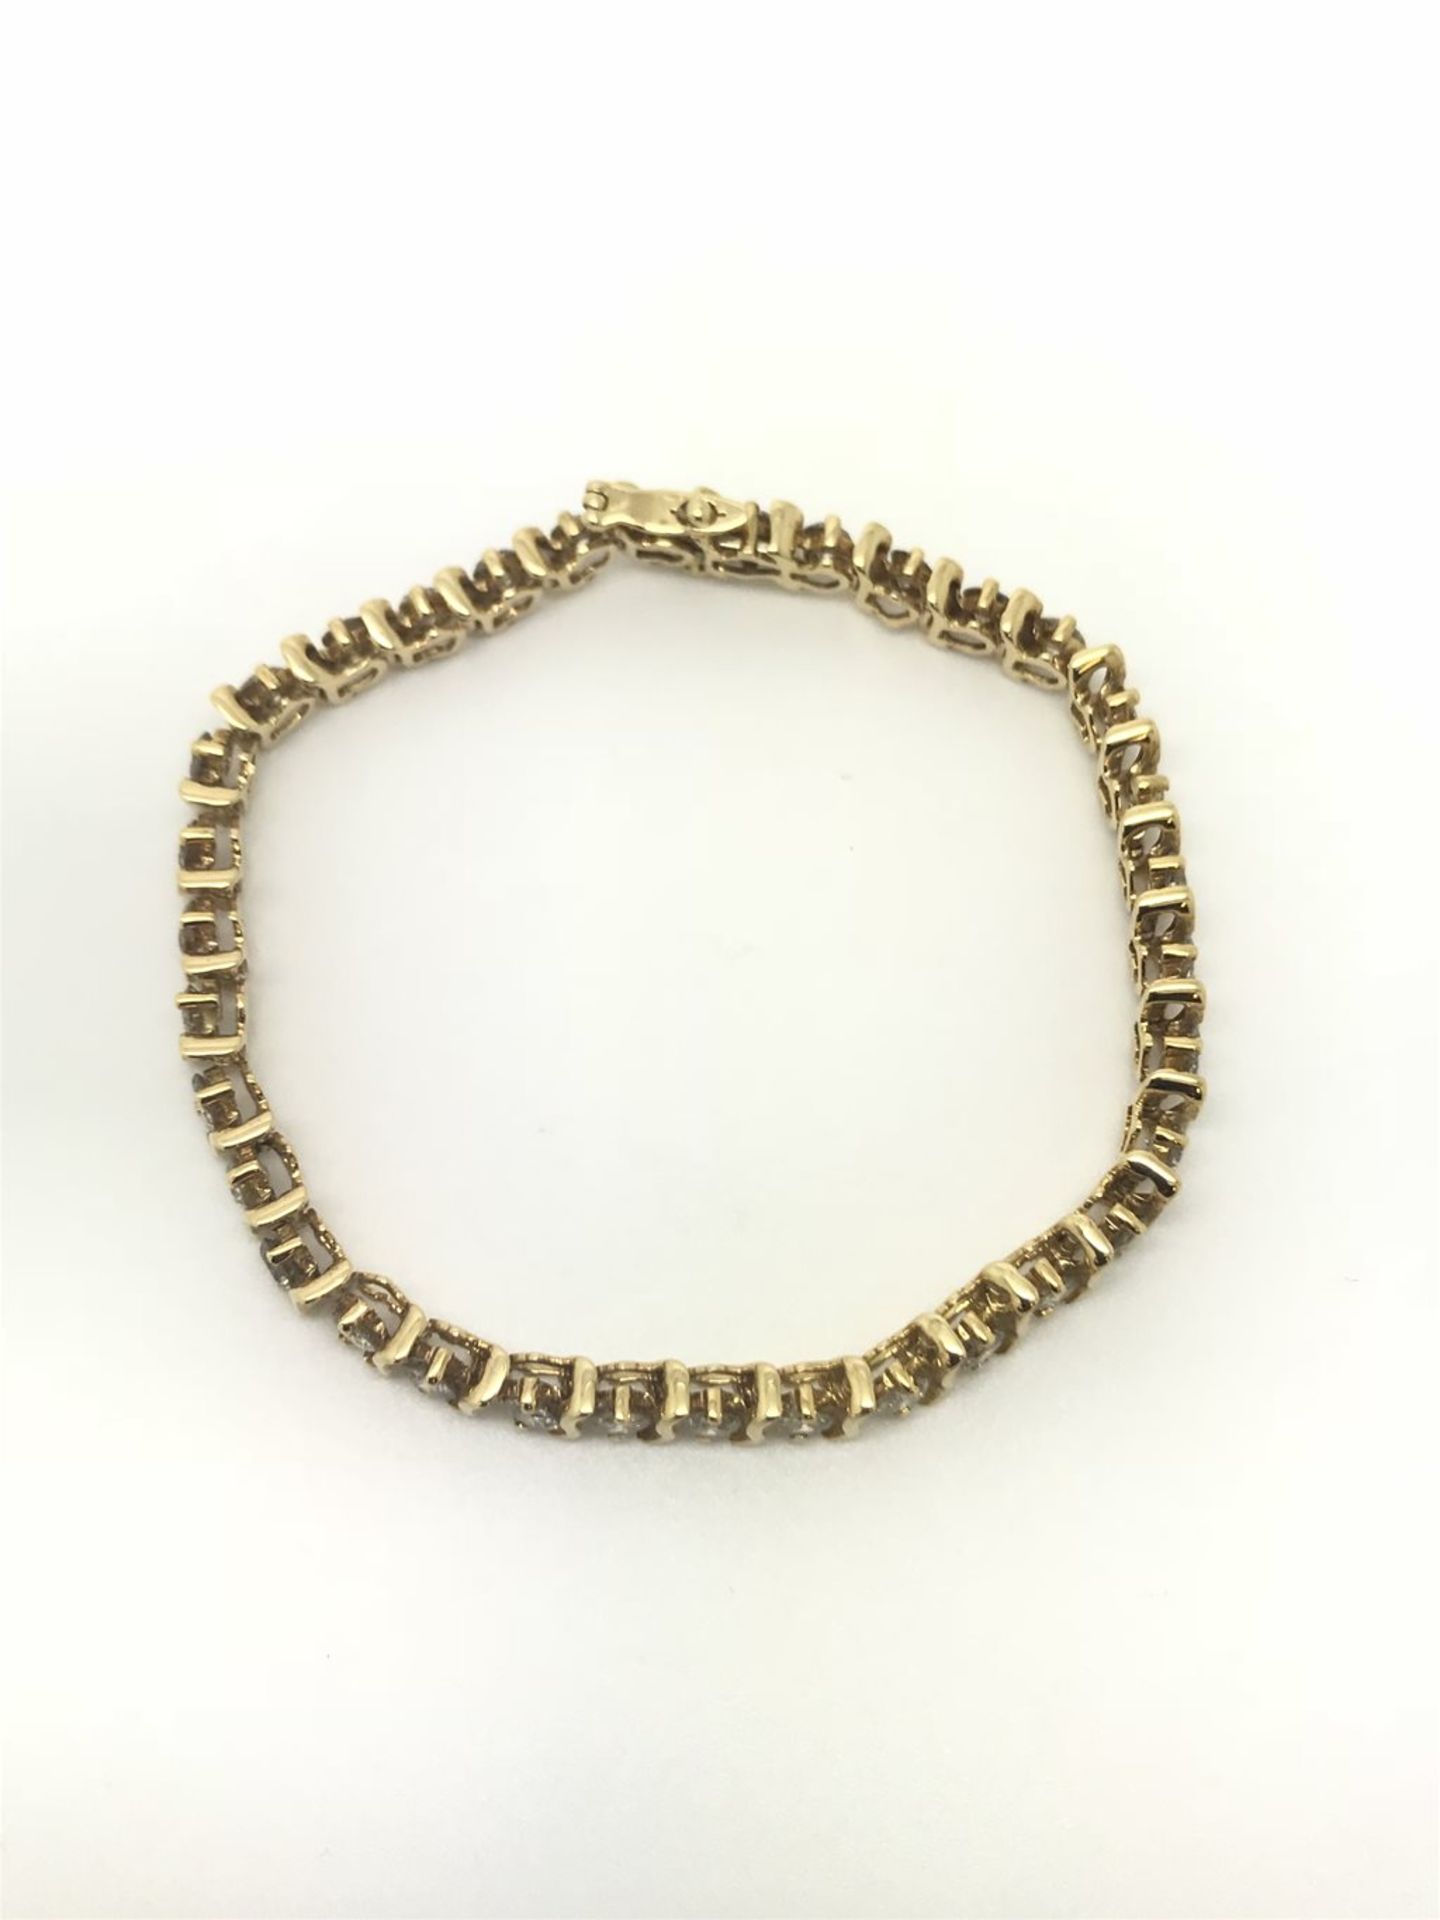 5.10ct Diamond Tennis Bracelet, 18ct Yellow Gold - Image 3 of 5